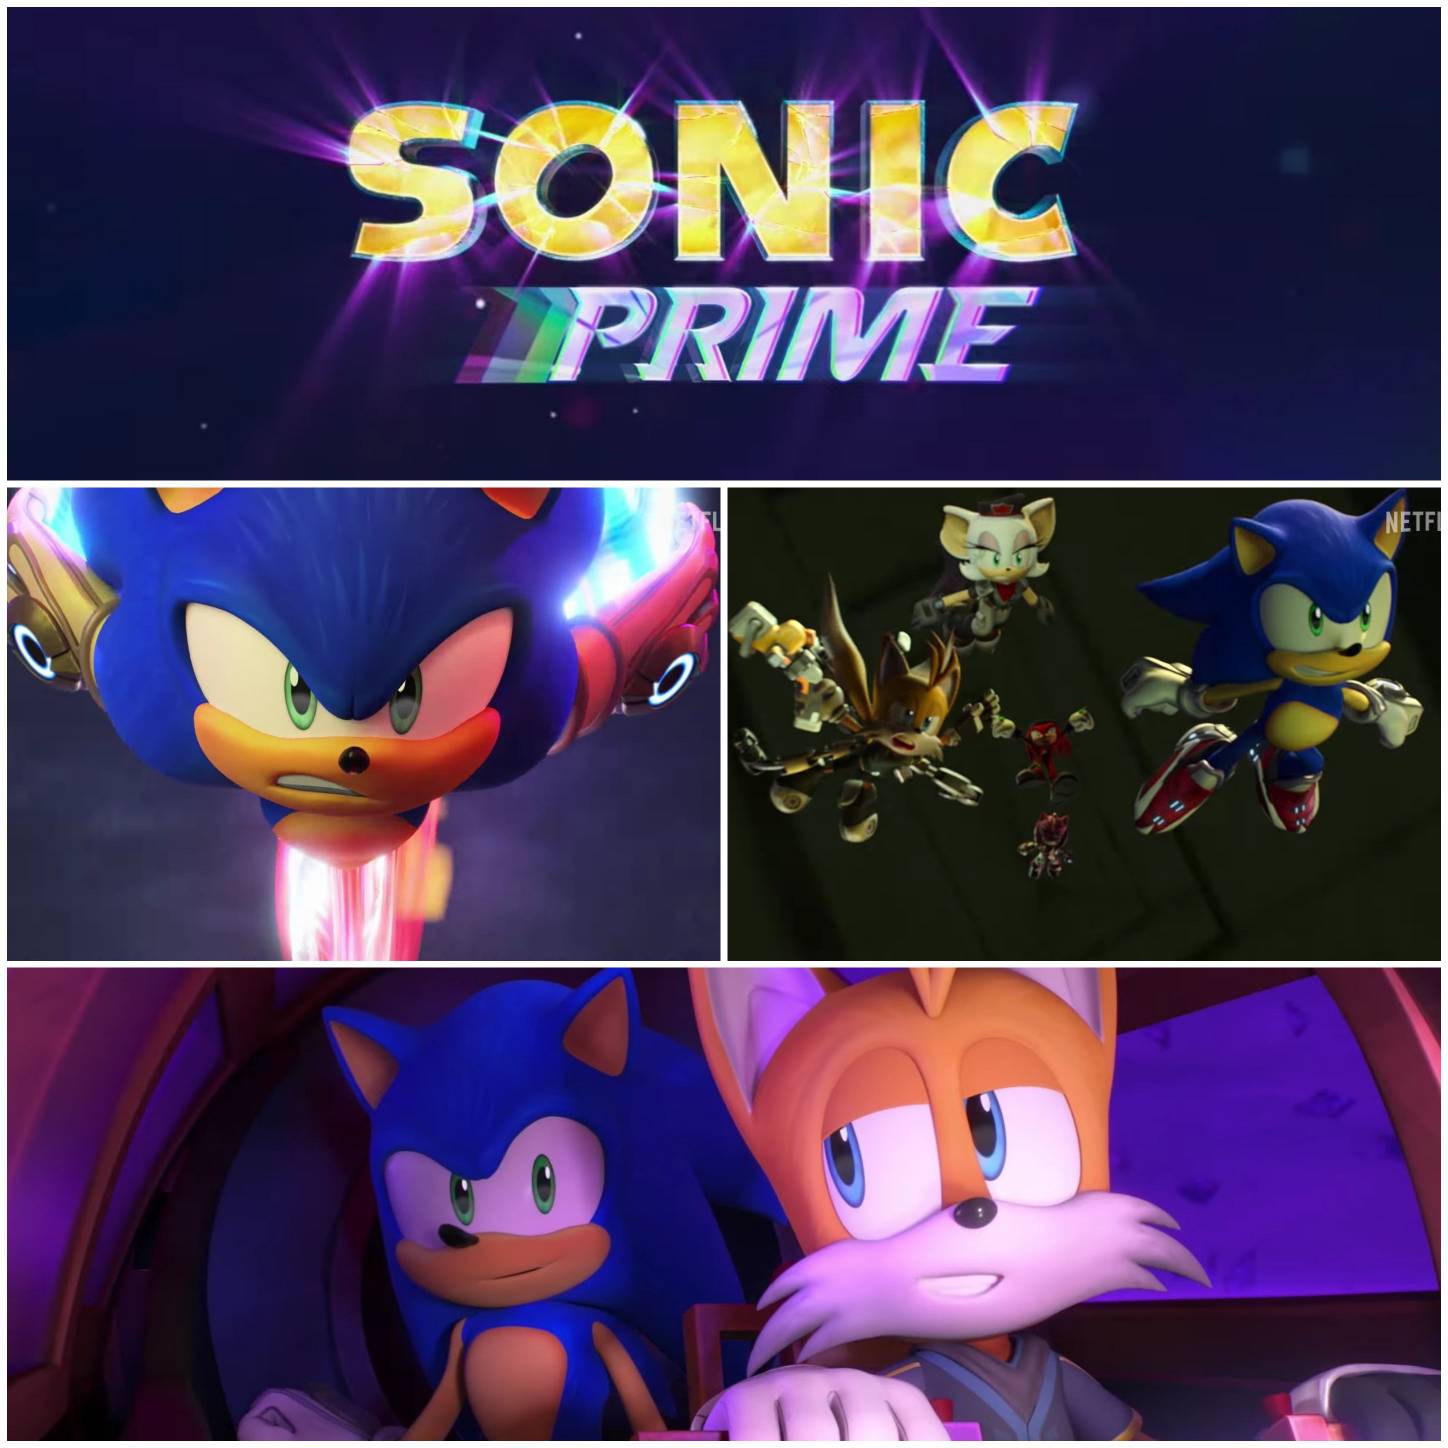 sonic prime season 3 NEW trailer! #SonicPrime #SonicHub #Sonic